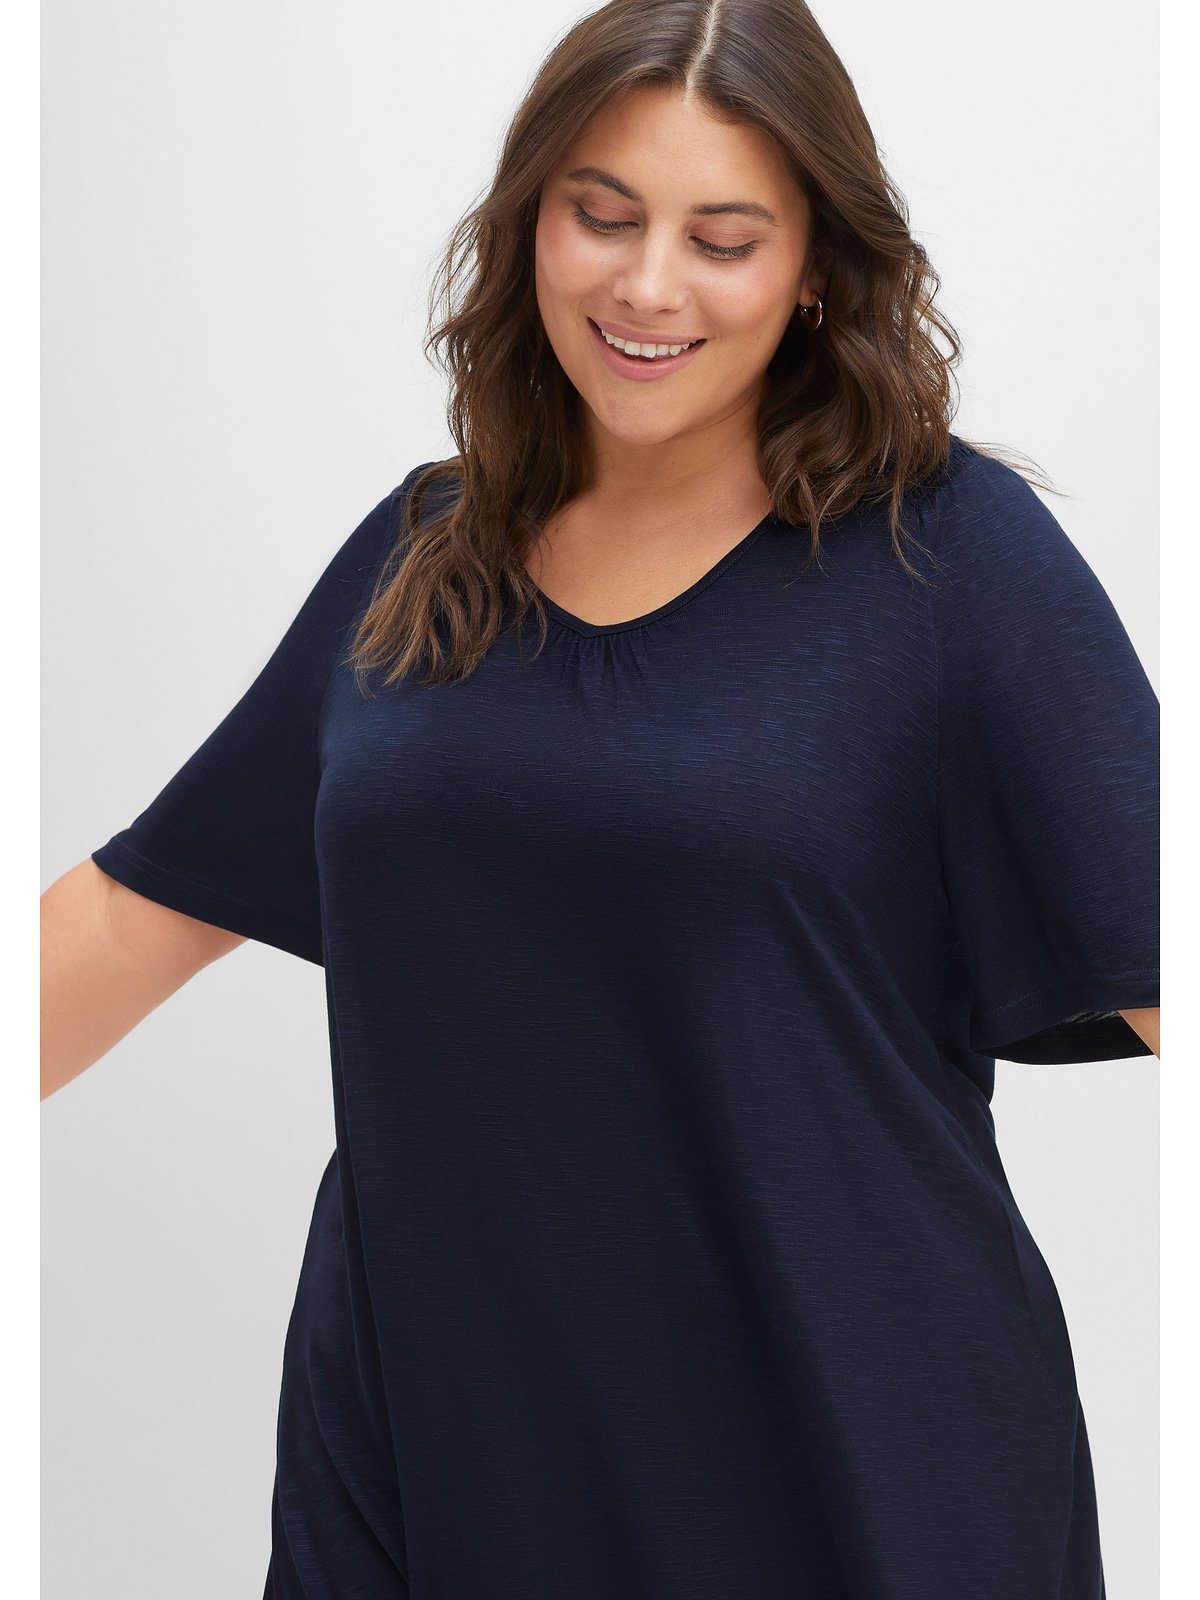 Große Sheego Flammgarn-Optik Longshirt in transparenter Größen nachtblau leicht